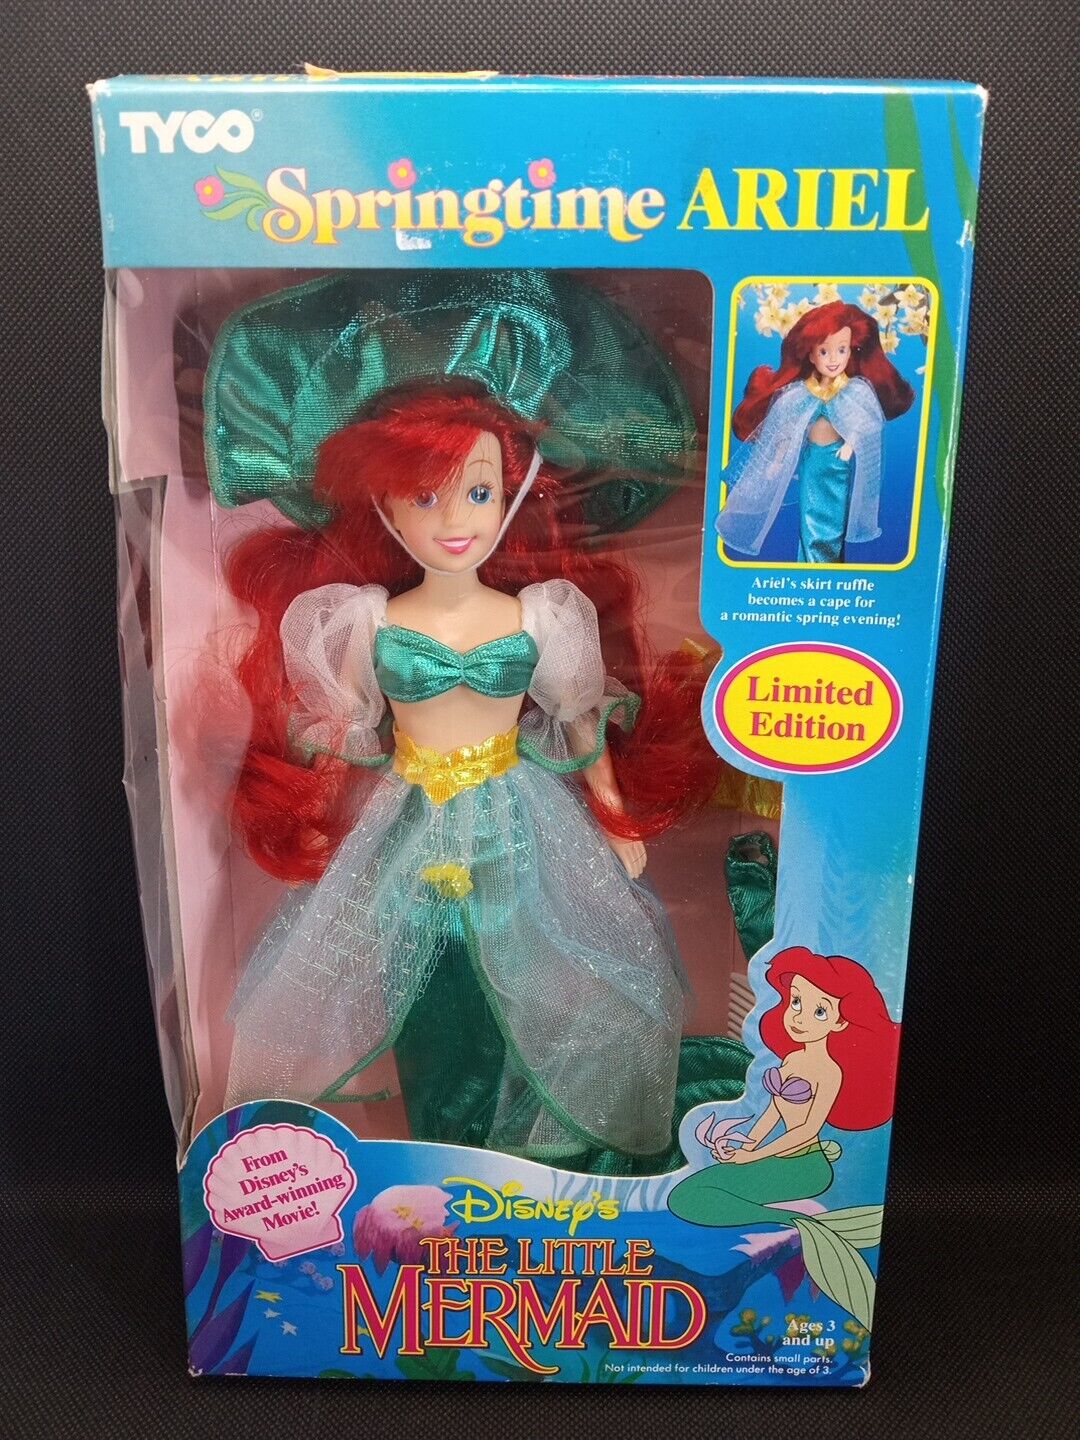 Vintage Tyco Springtime ARIEL Limited Edition Disney The Little Mermaid Doll